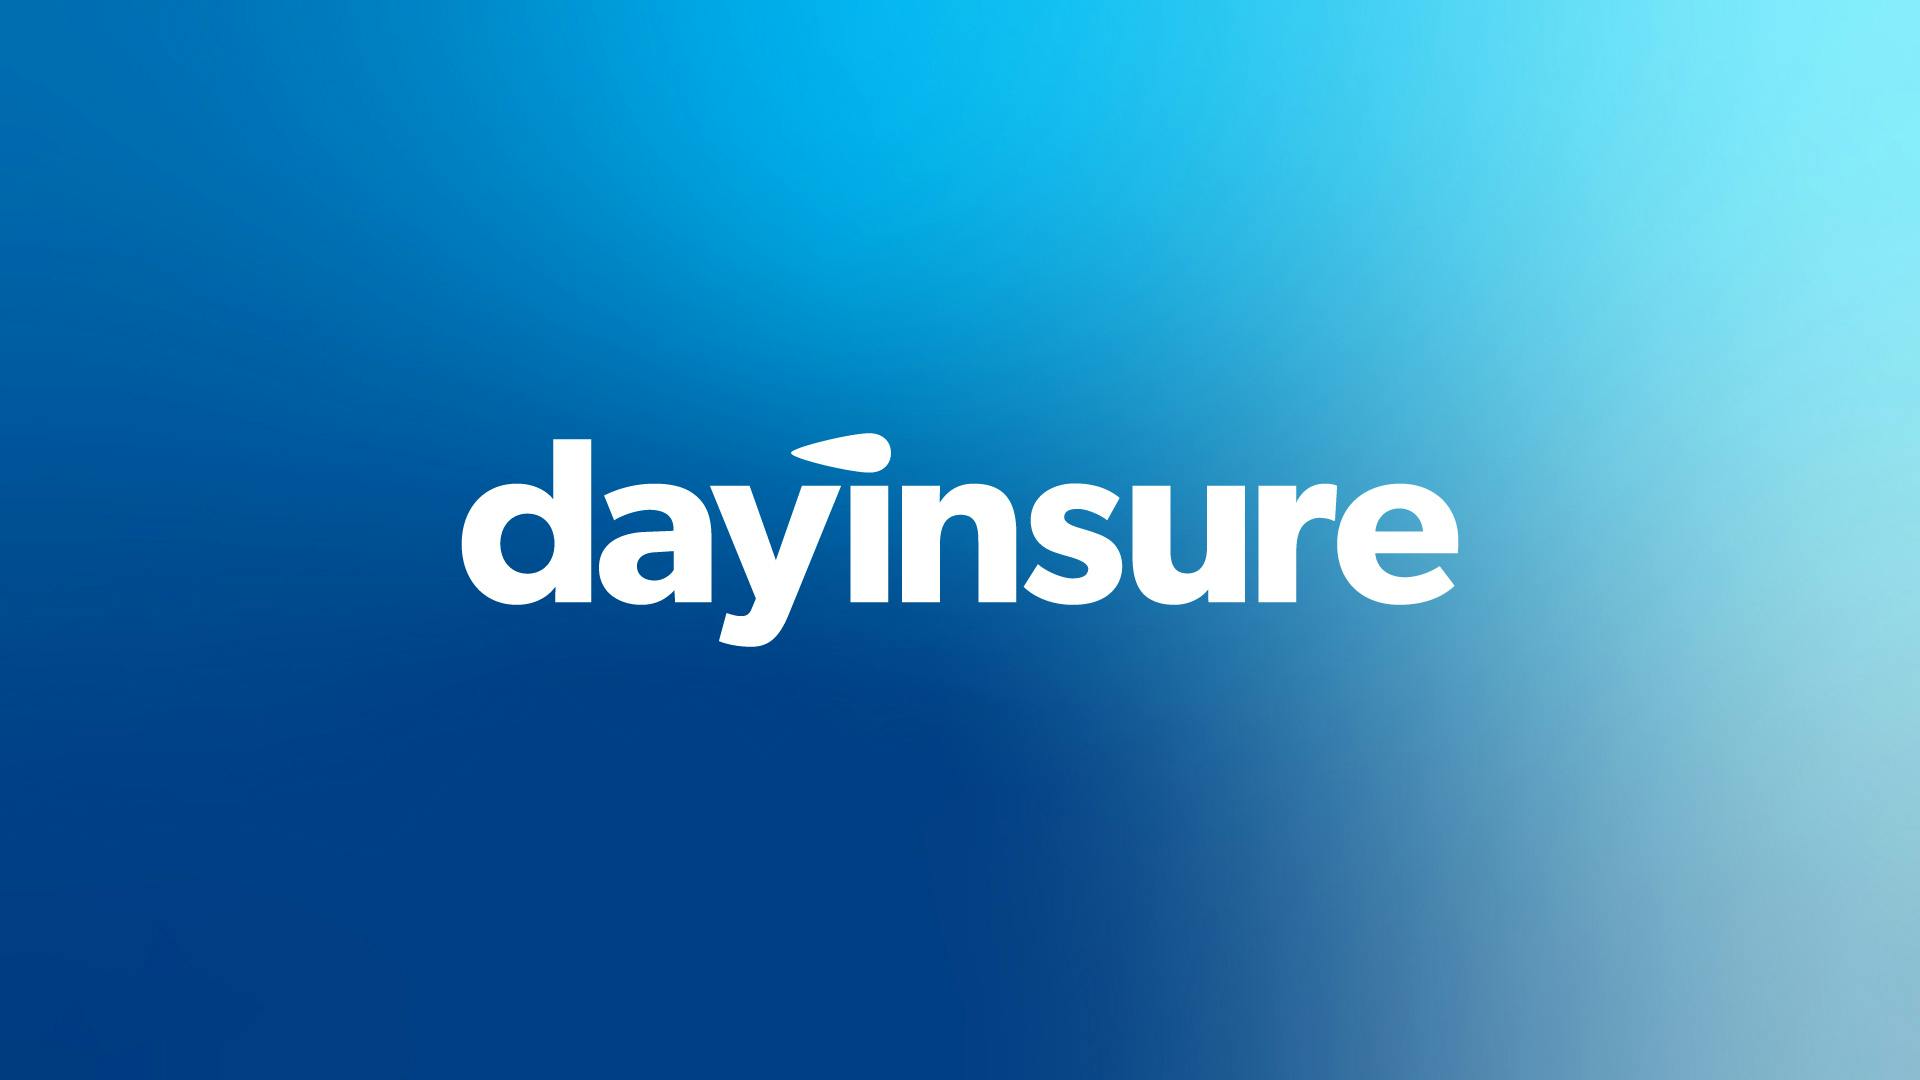 Day insure logo